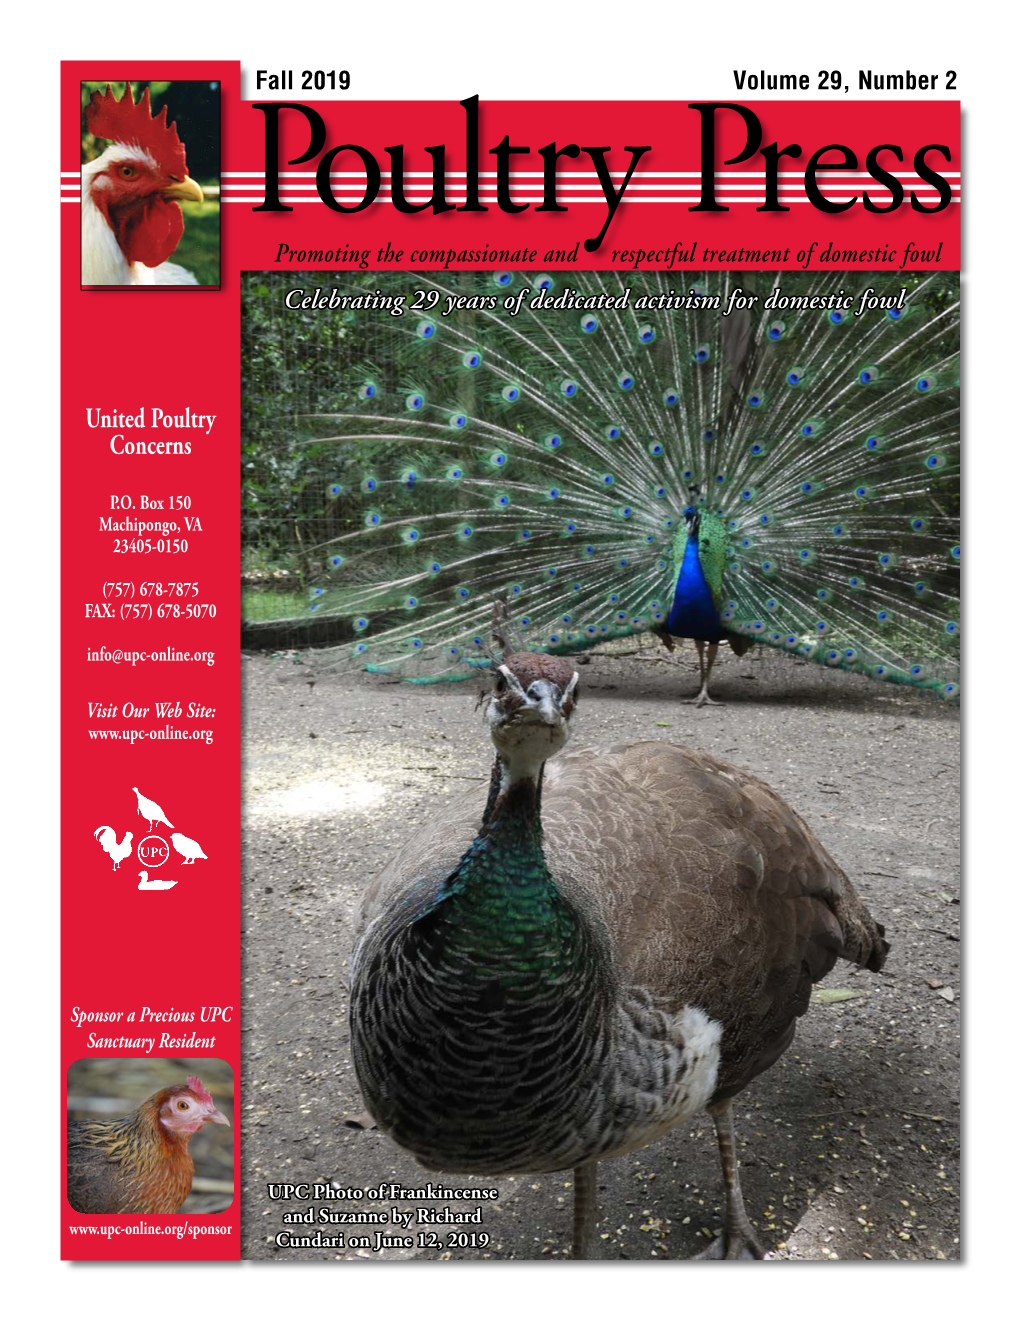 UPC Fall 2019 Poultry Press